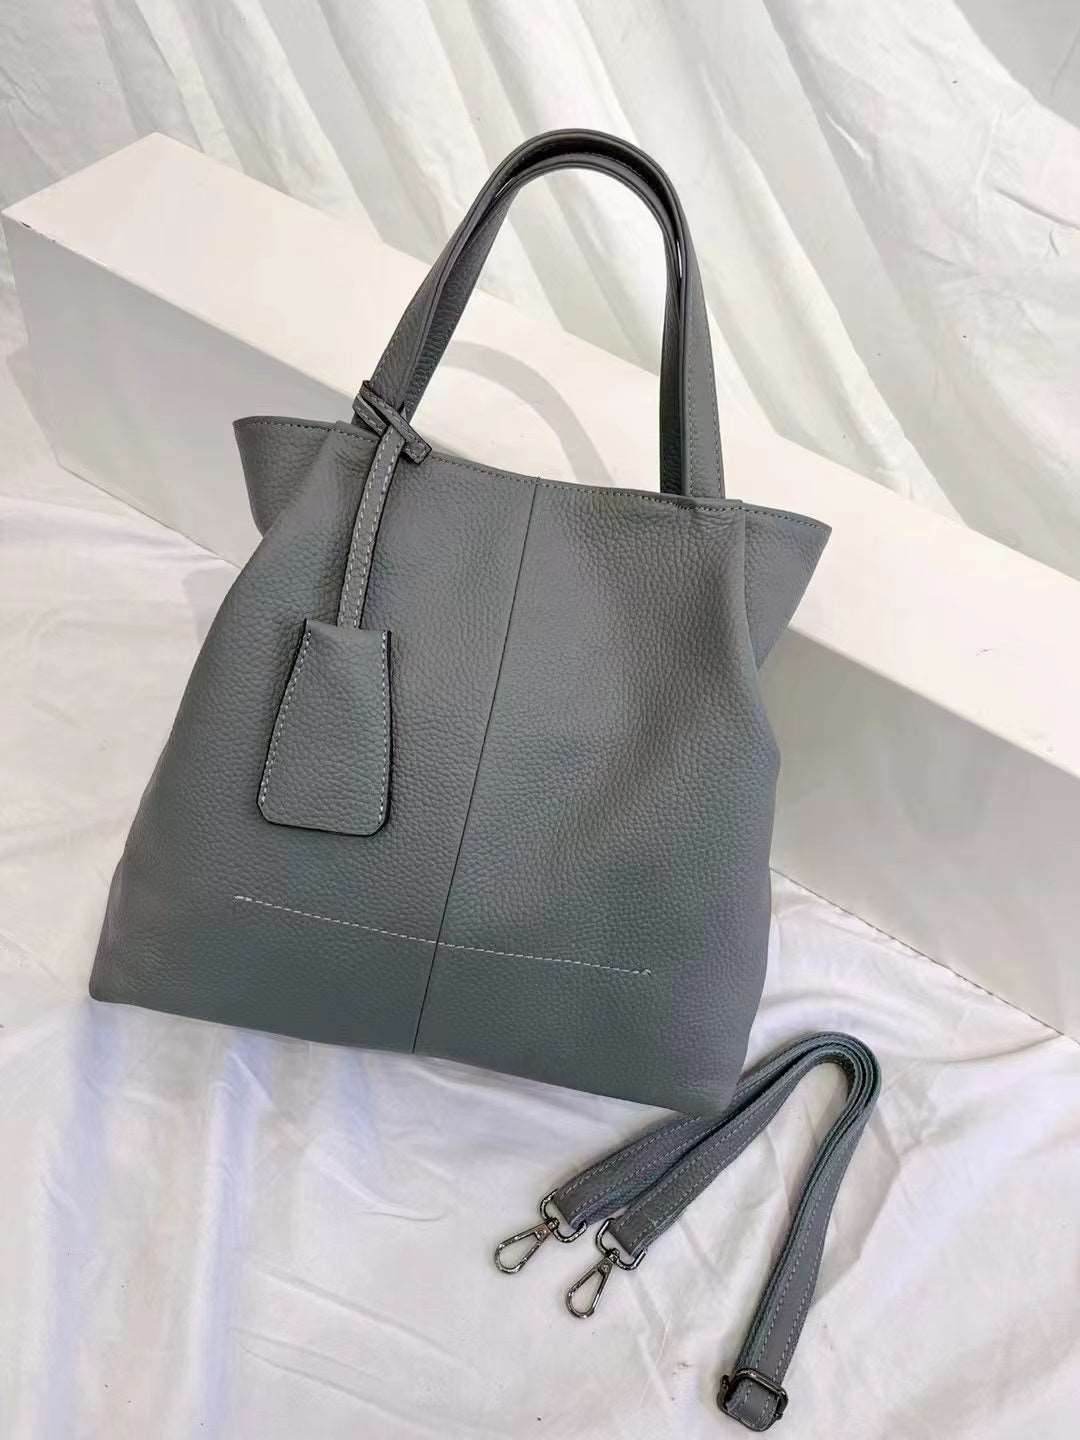 Premium Quality Women's Chic Oversized Leather Tote Bag Handbag Shoulder Bag Crossbody Companion woyaza